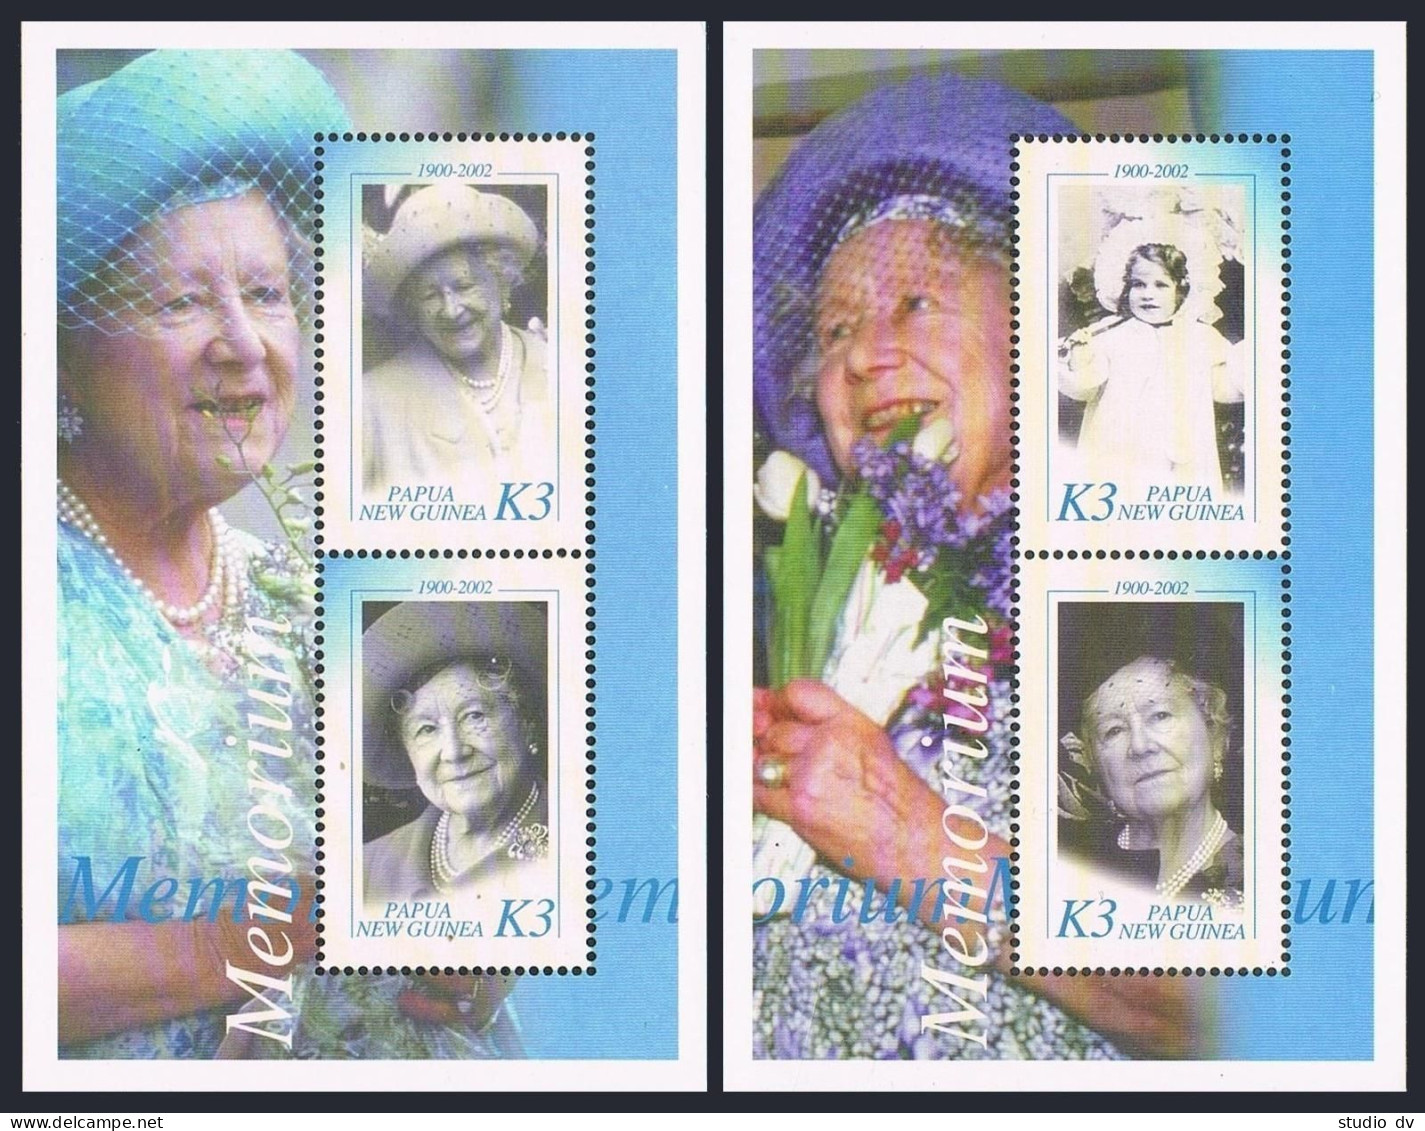 Papua New Guinea 1044 Ag,1045-1046 Sheets,MNH. Queen Mother Elizabeth,1900-2002. - Papua New Guinea